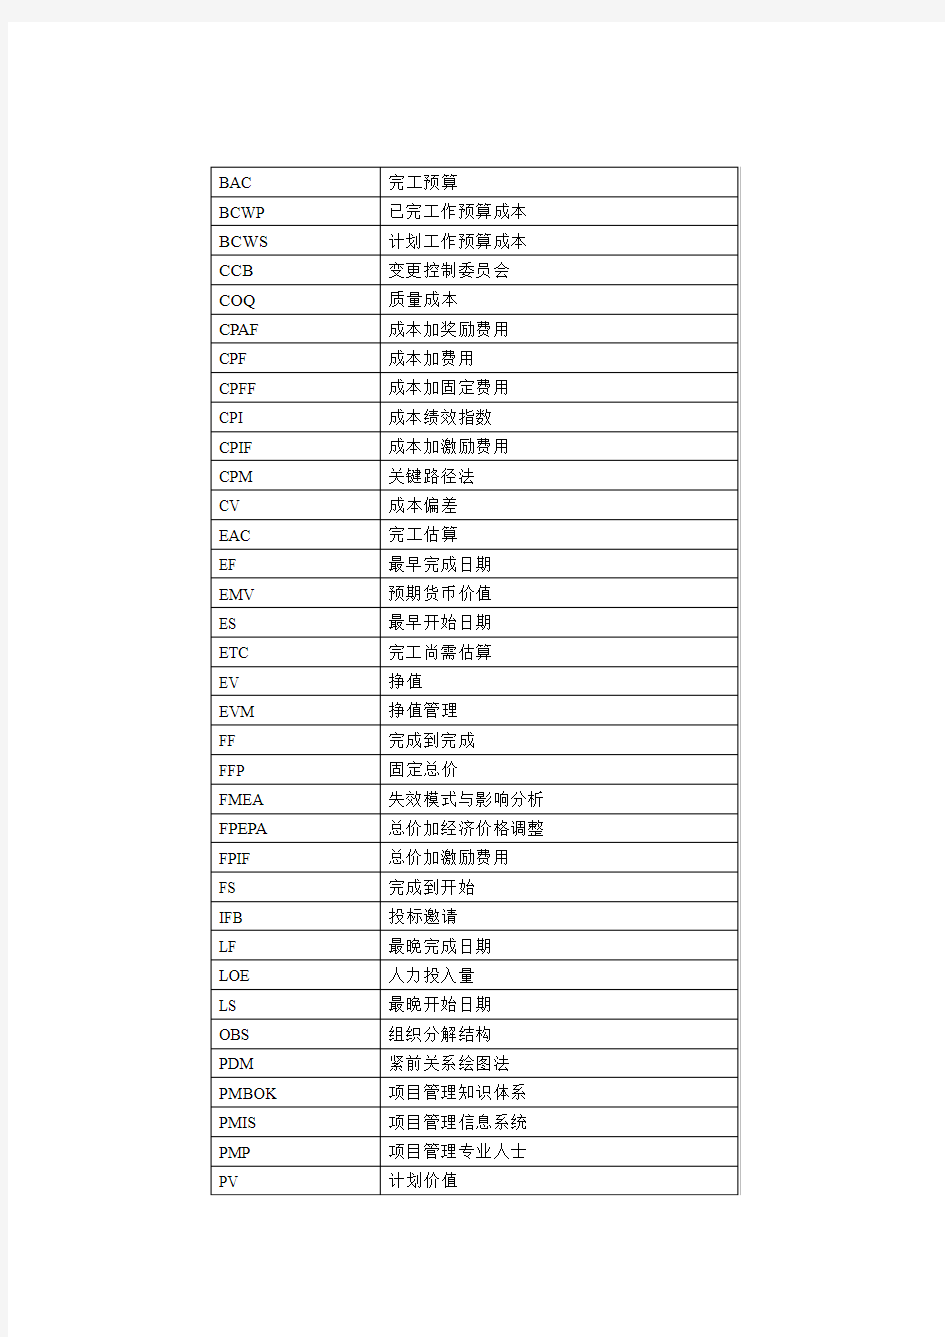 PMBOK2008词汇表(中文排序)